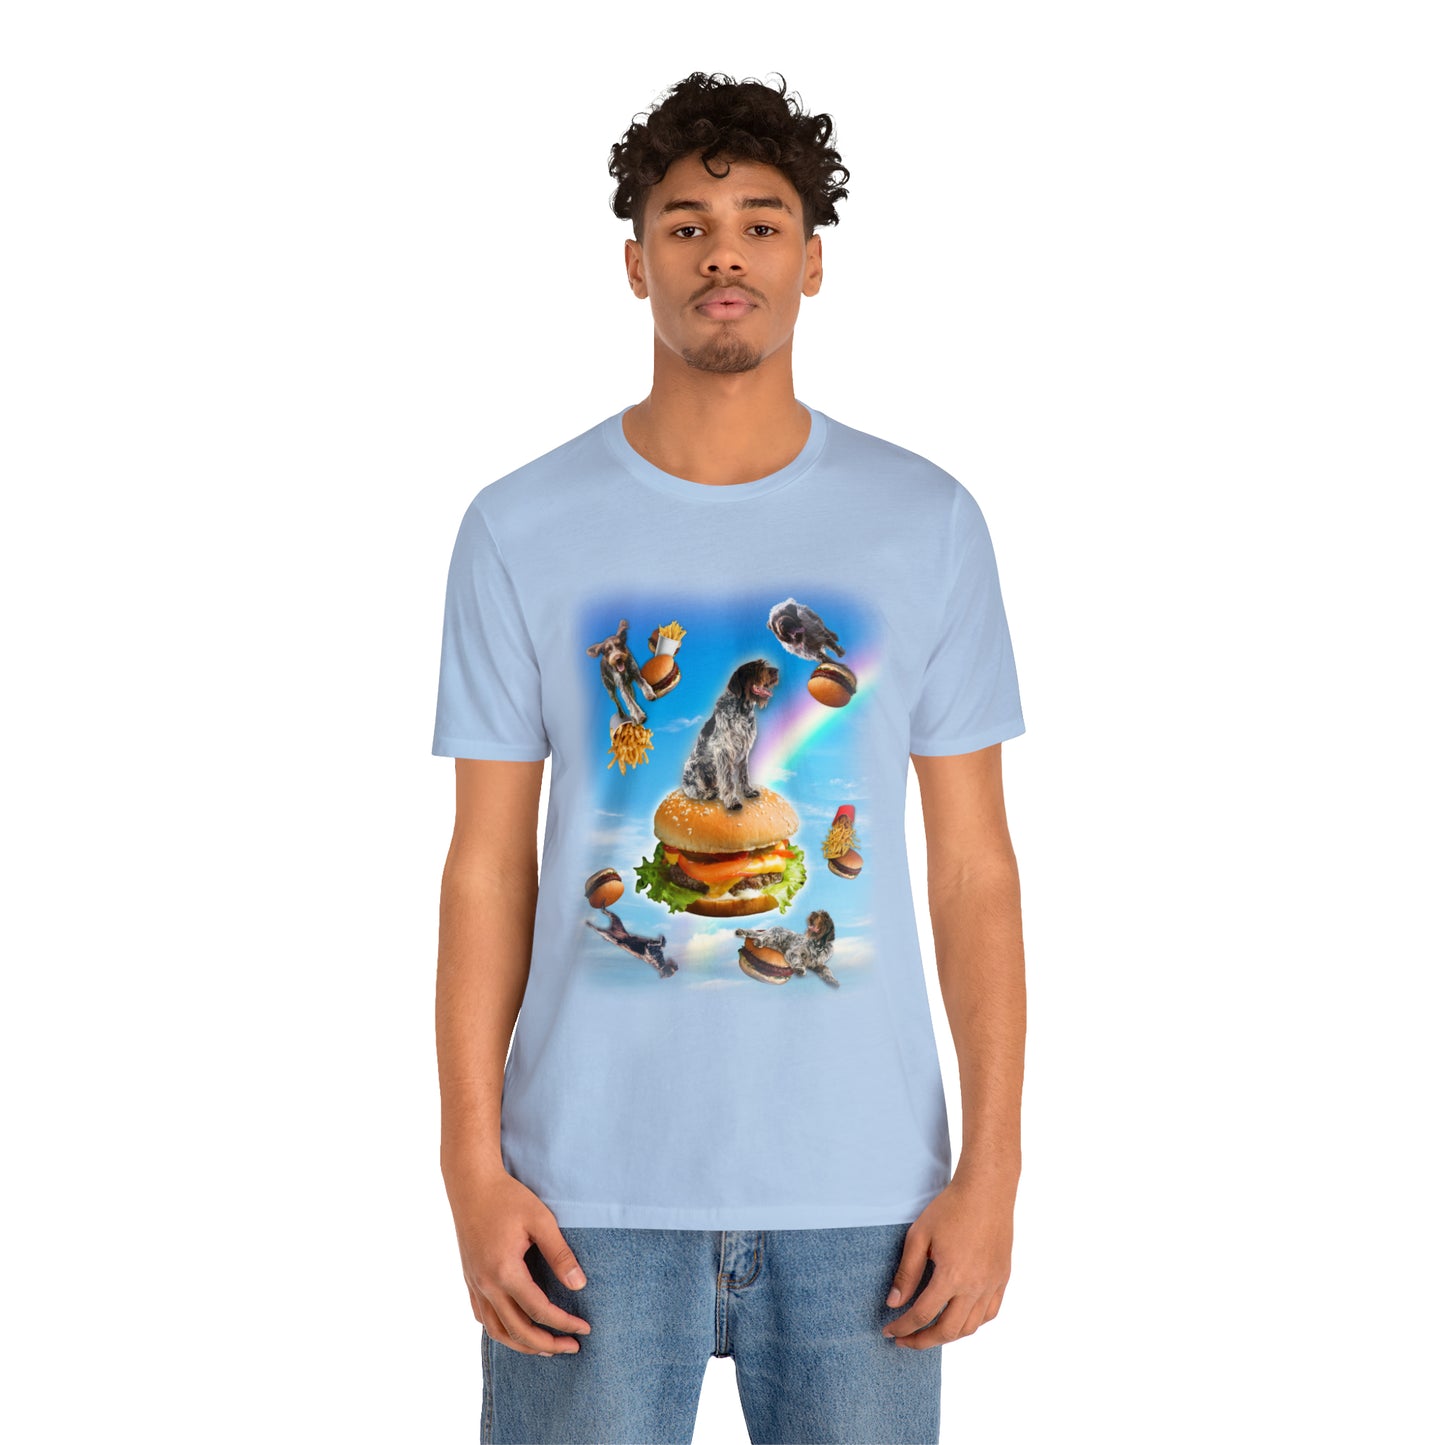 Griffon T-shirt Burgers Fries and Rainbows Women & Men